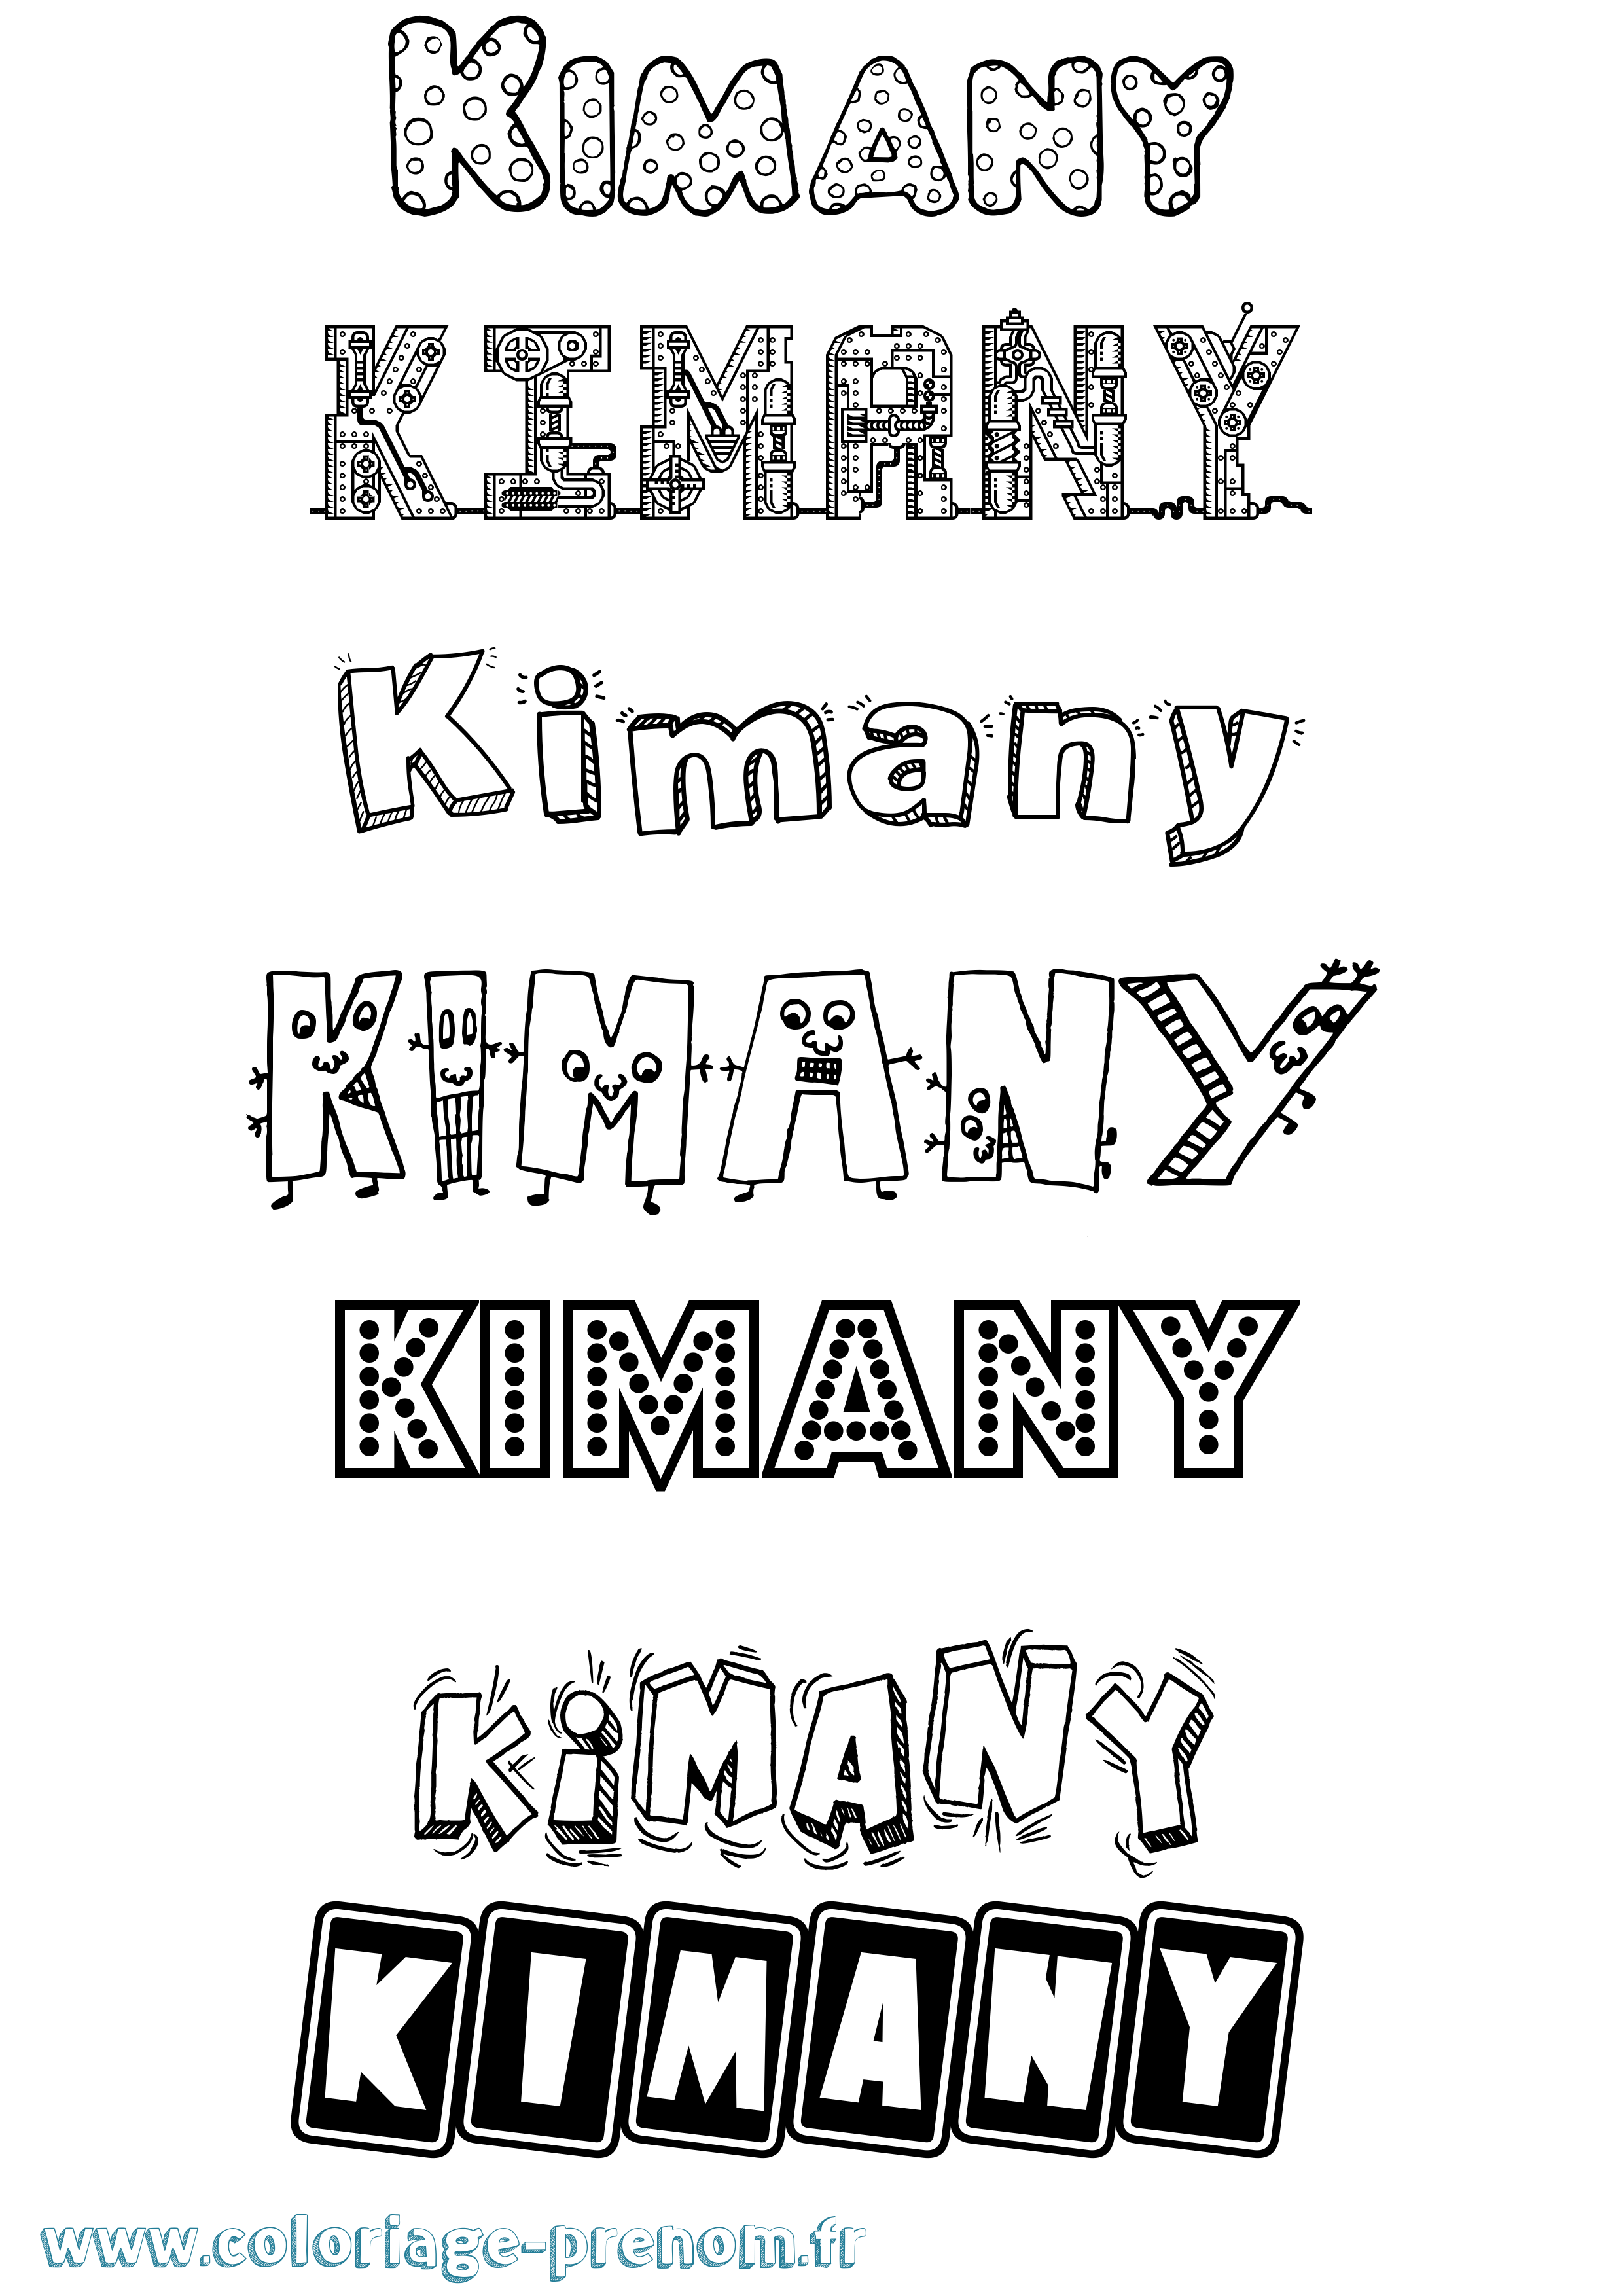 Coloriage prénom Kimany Fun